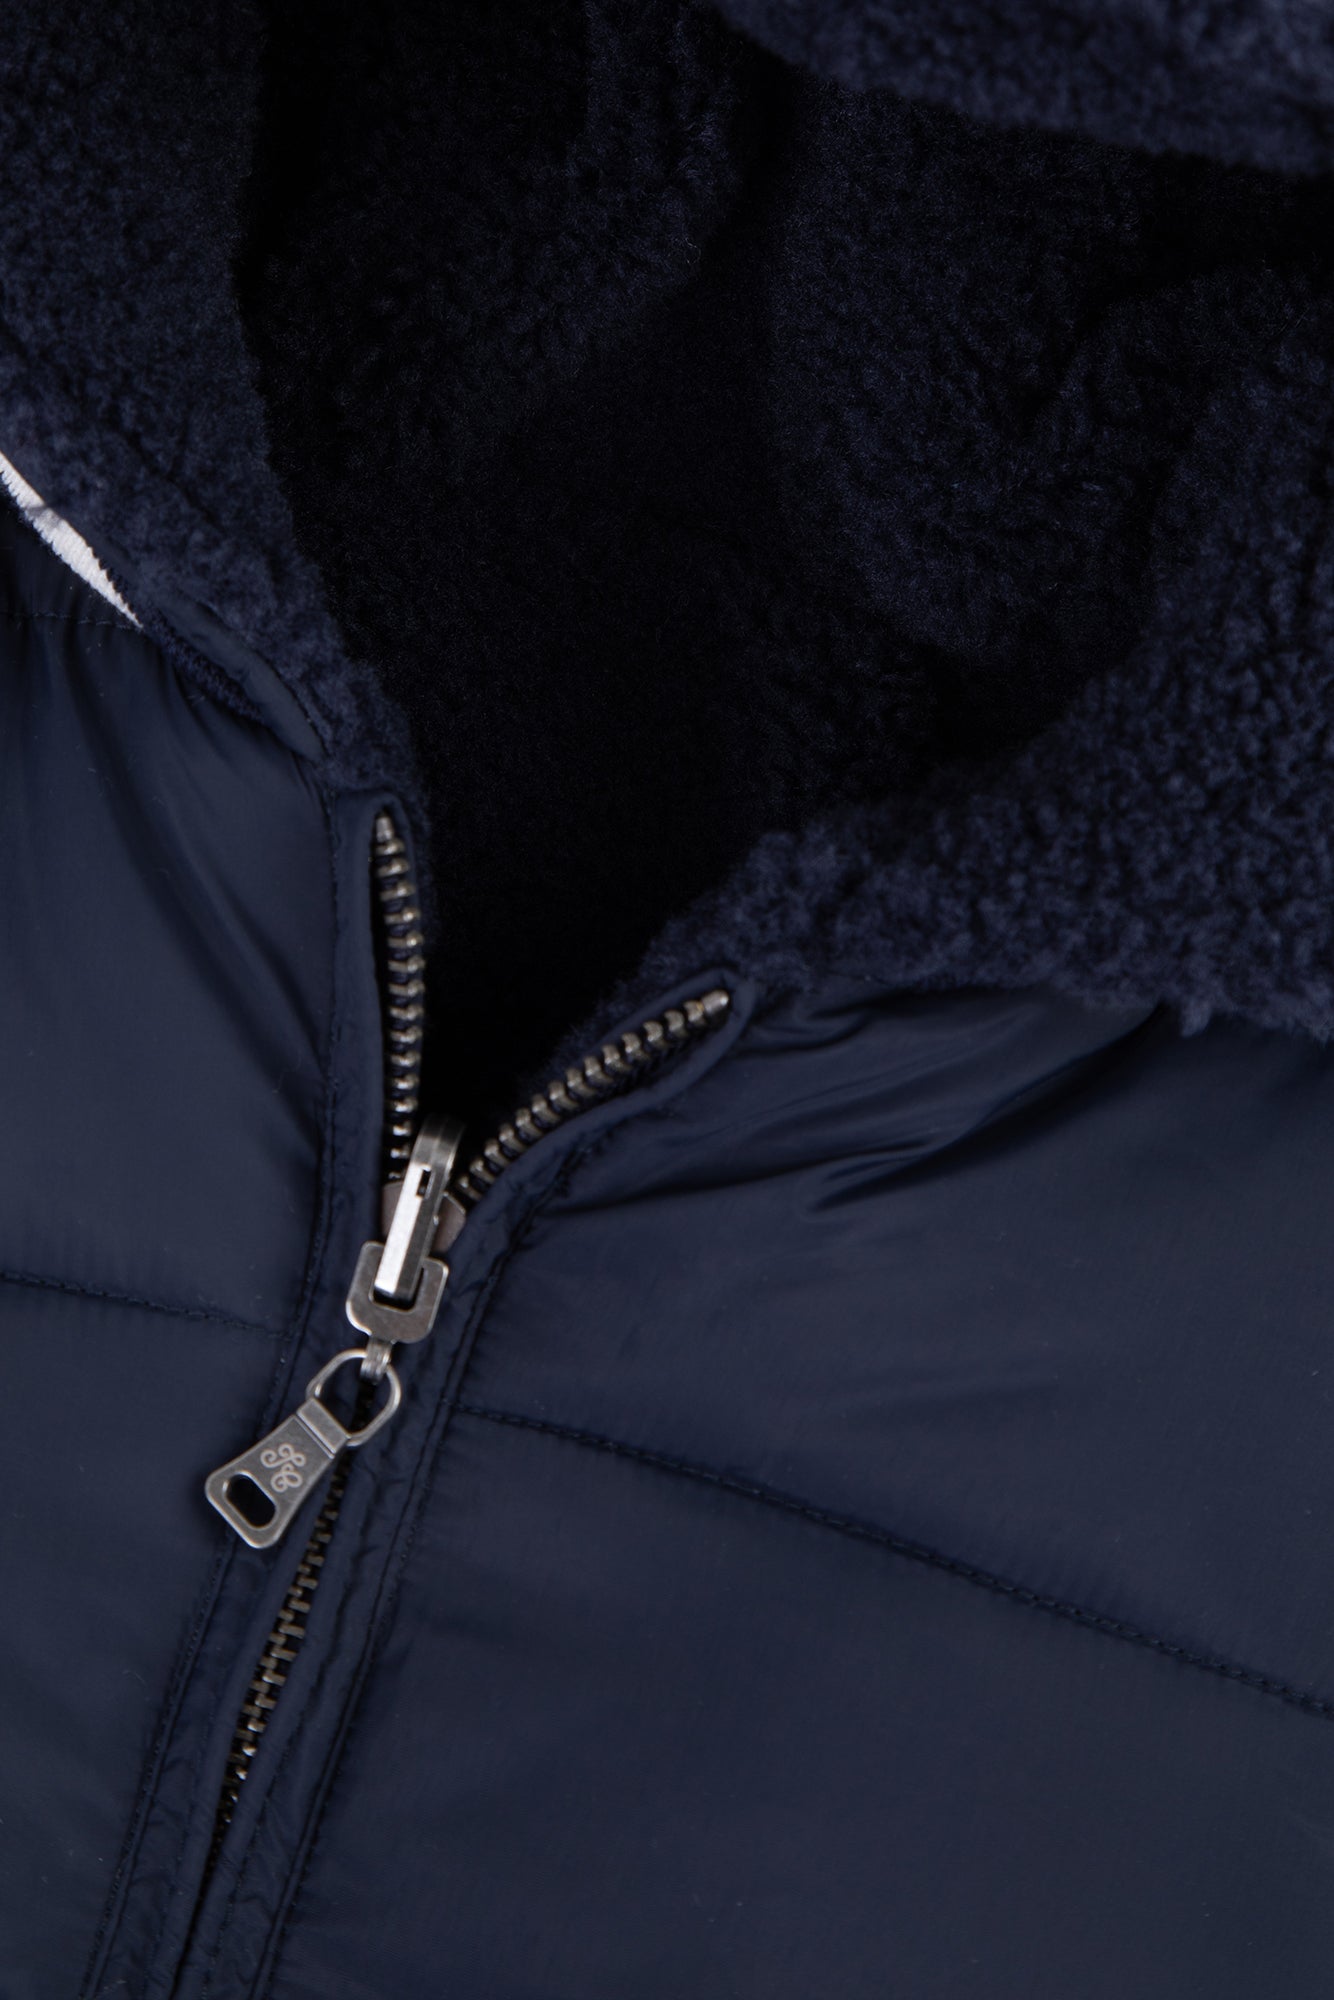 Tartine Sherpa Lined Hooded Puffer Jacket